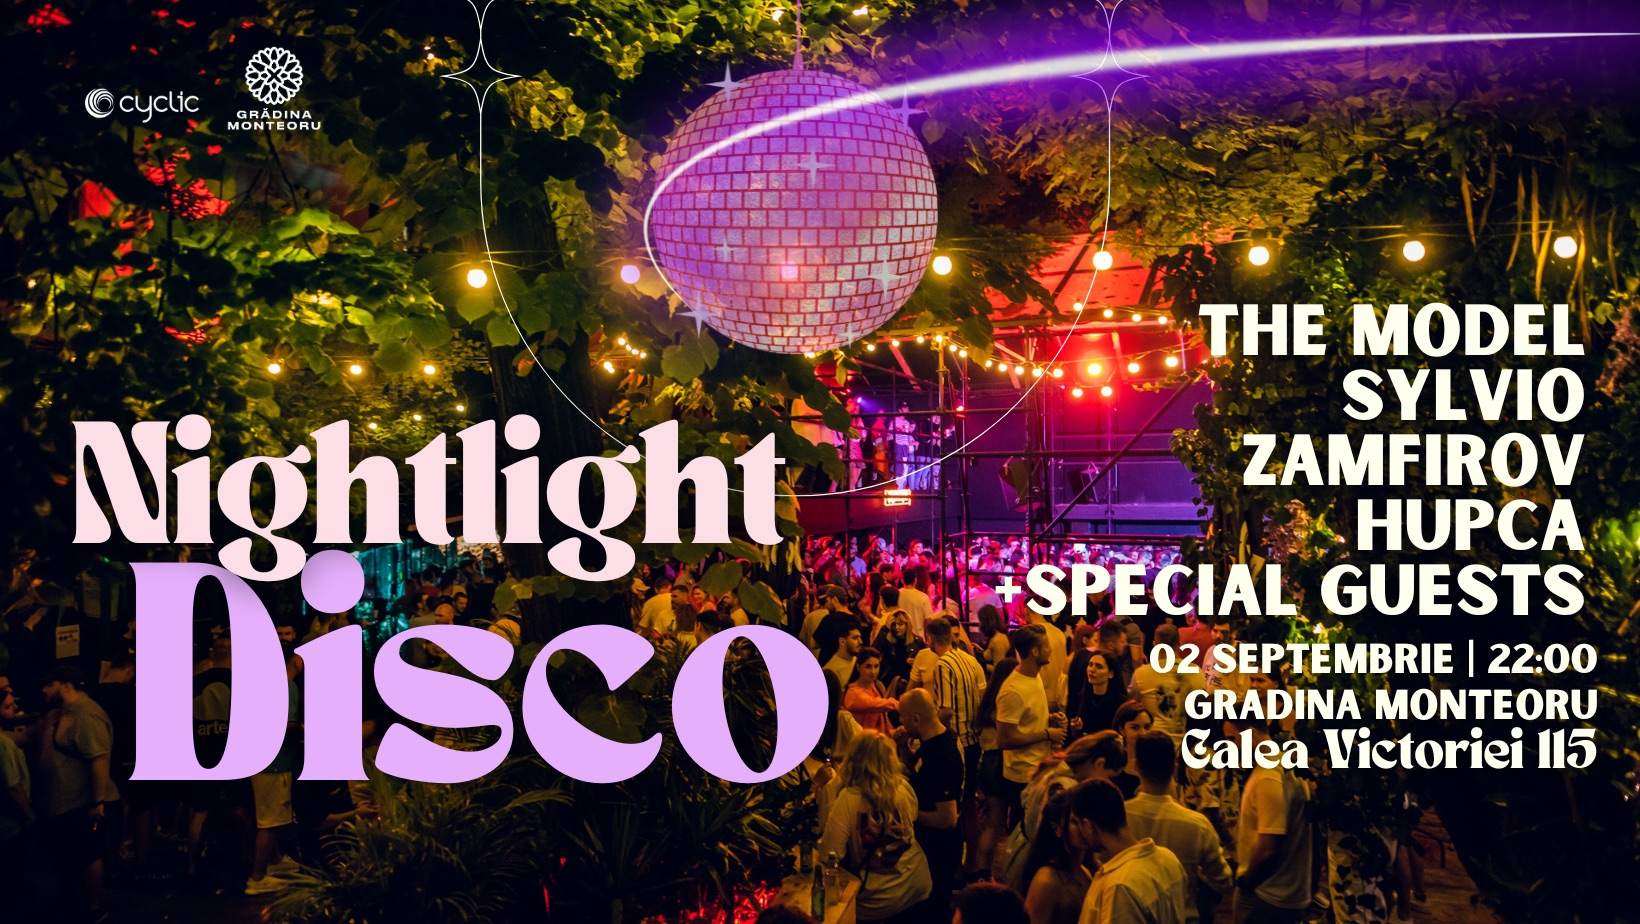 Nightlight disco with The Model, Sylvio, Zamfirov, Hupca, + Special guest - フライヤー表